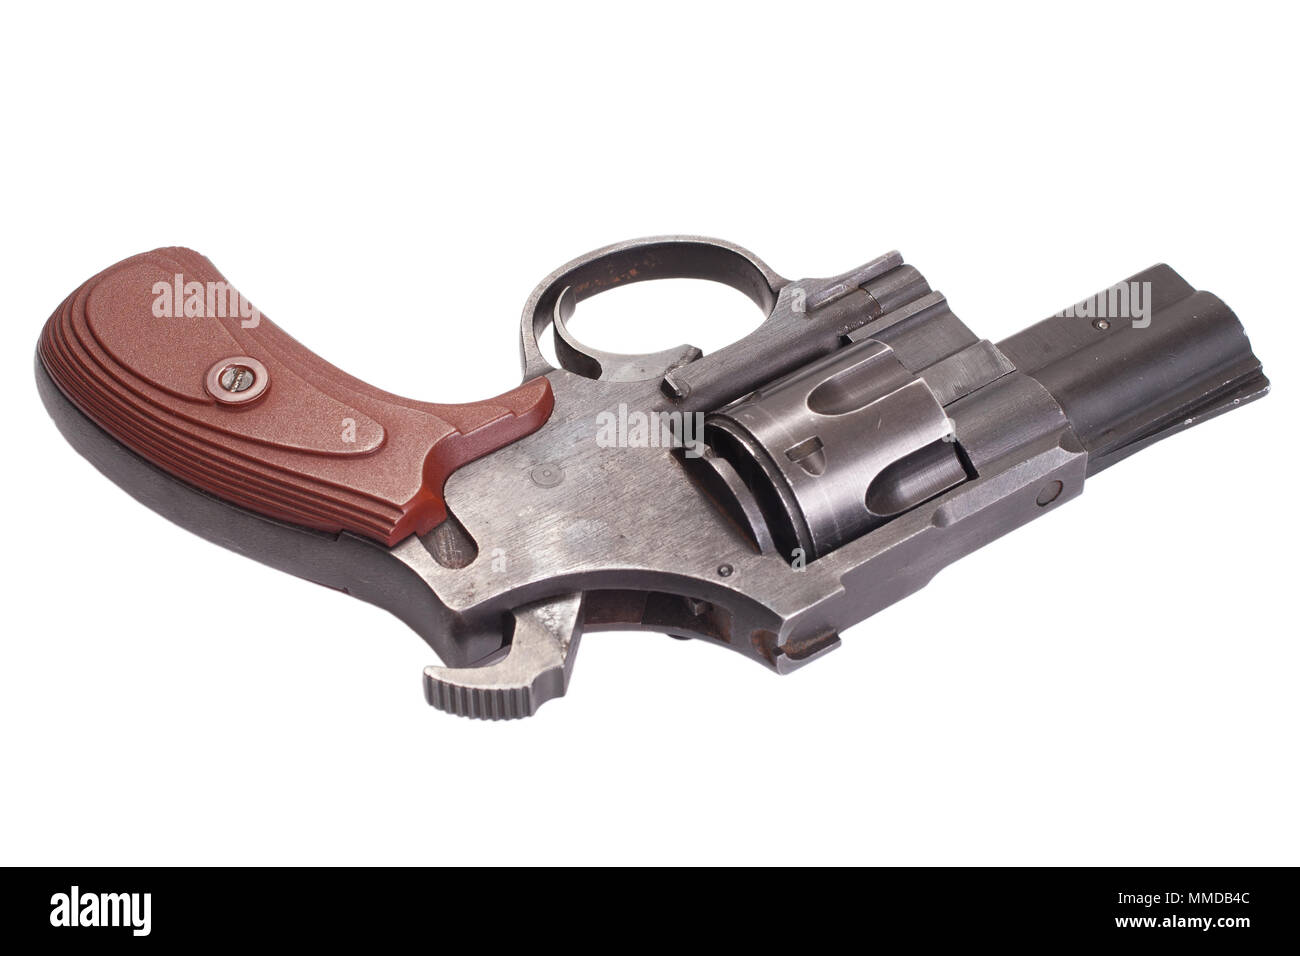 Pistola a Salve Revolver Olimpic 2 Calibro 380 Silver Bruni Art